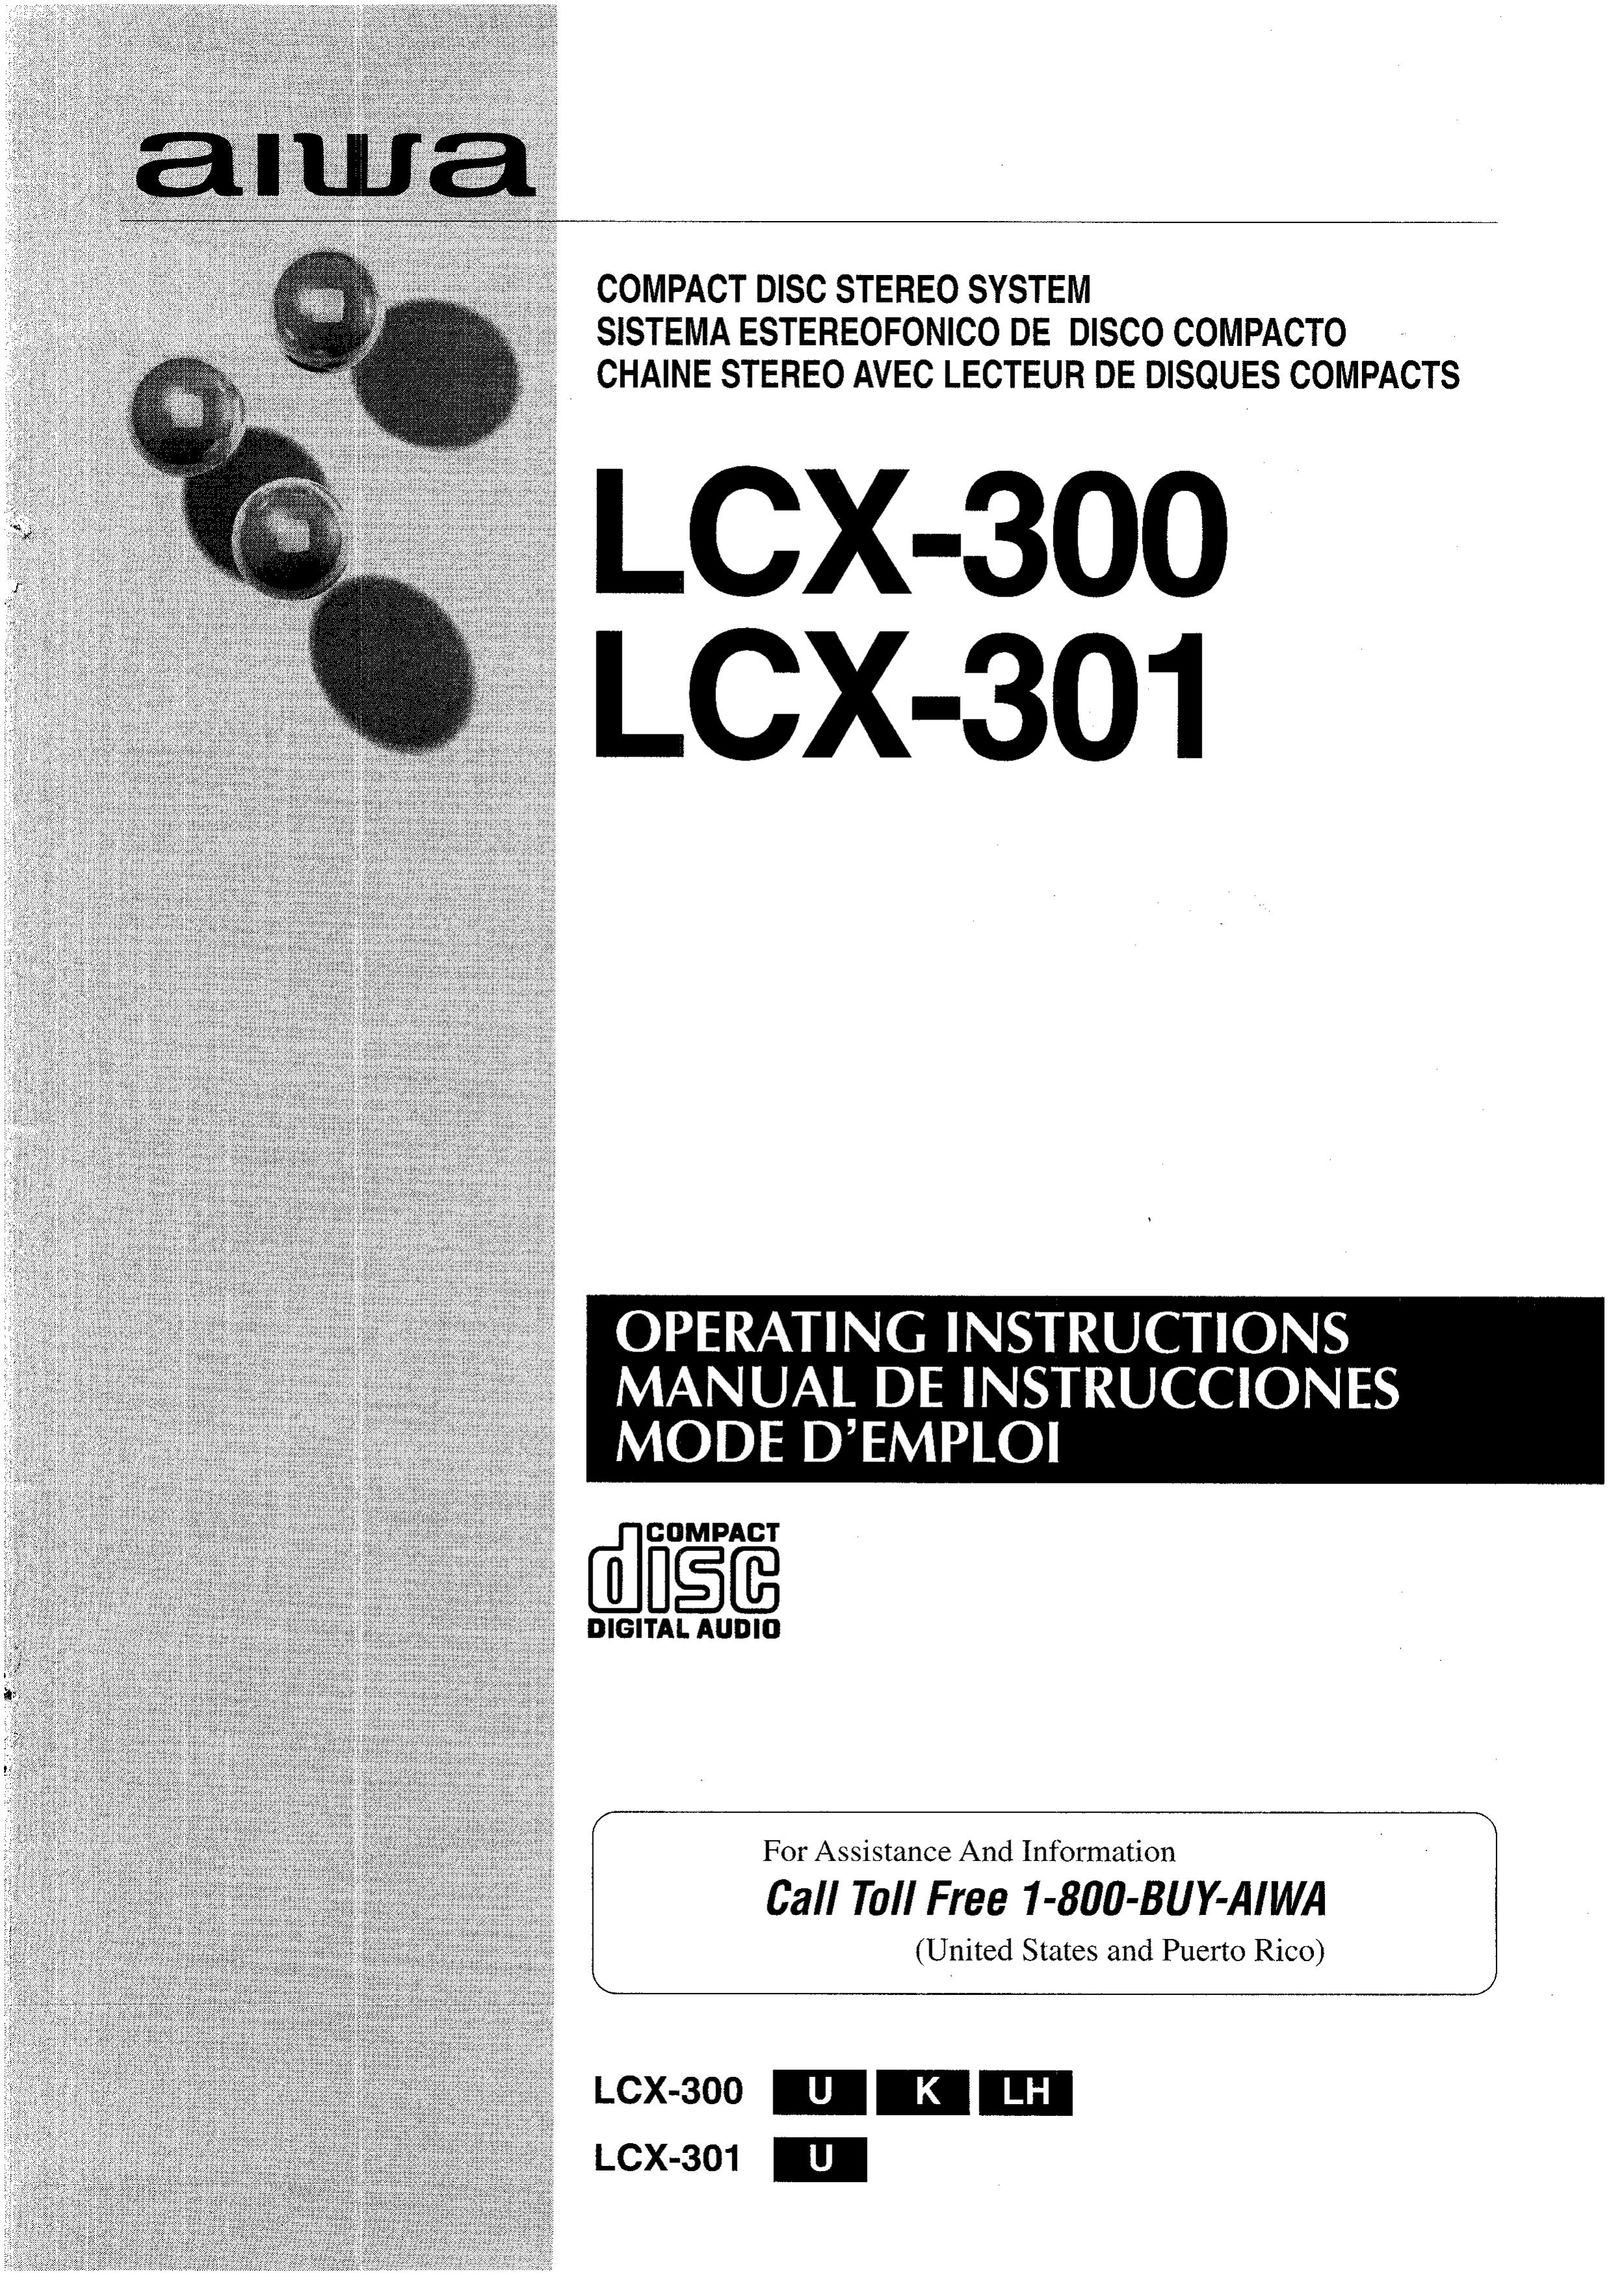 Aiwa LCX-301 CD Player User Manual (Page 1)